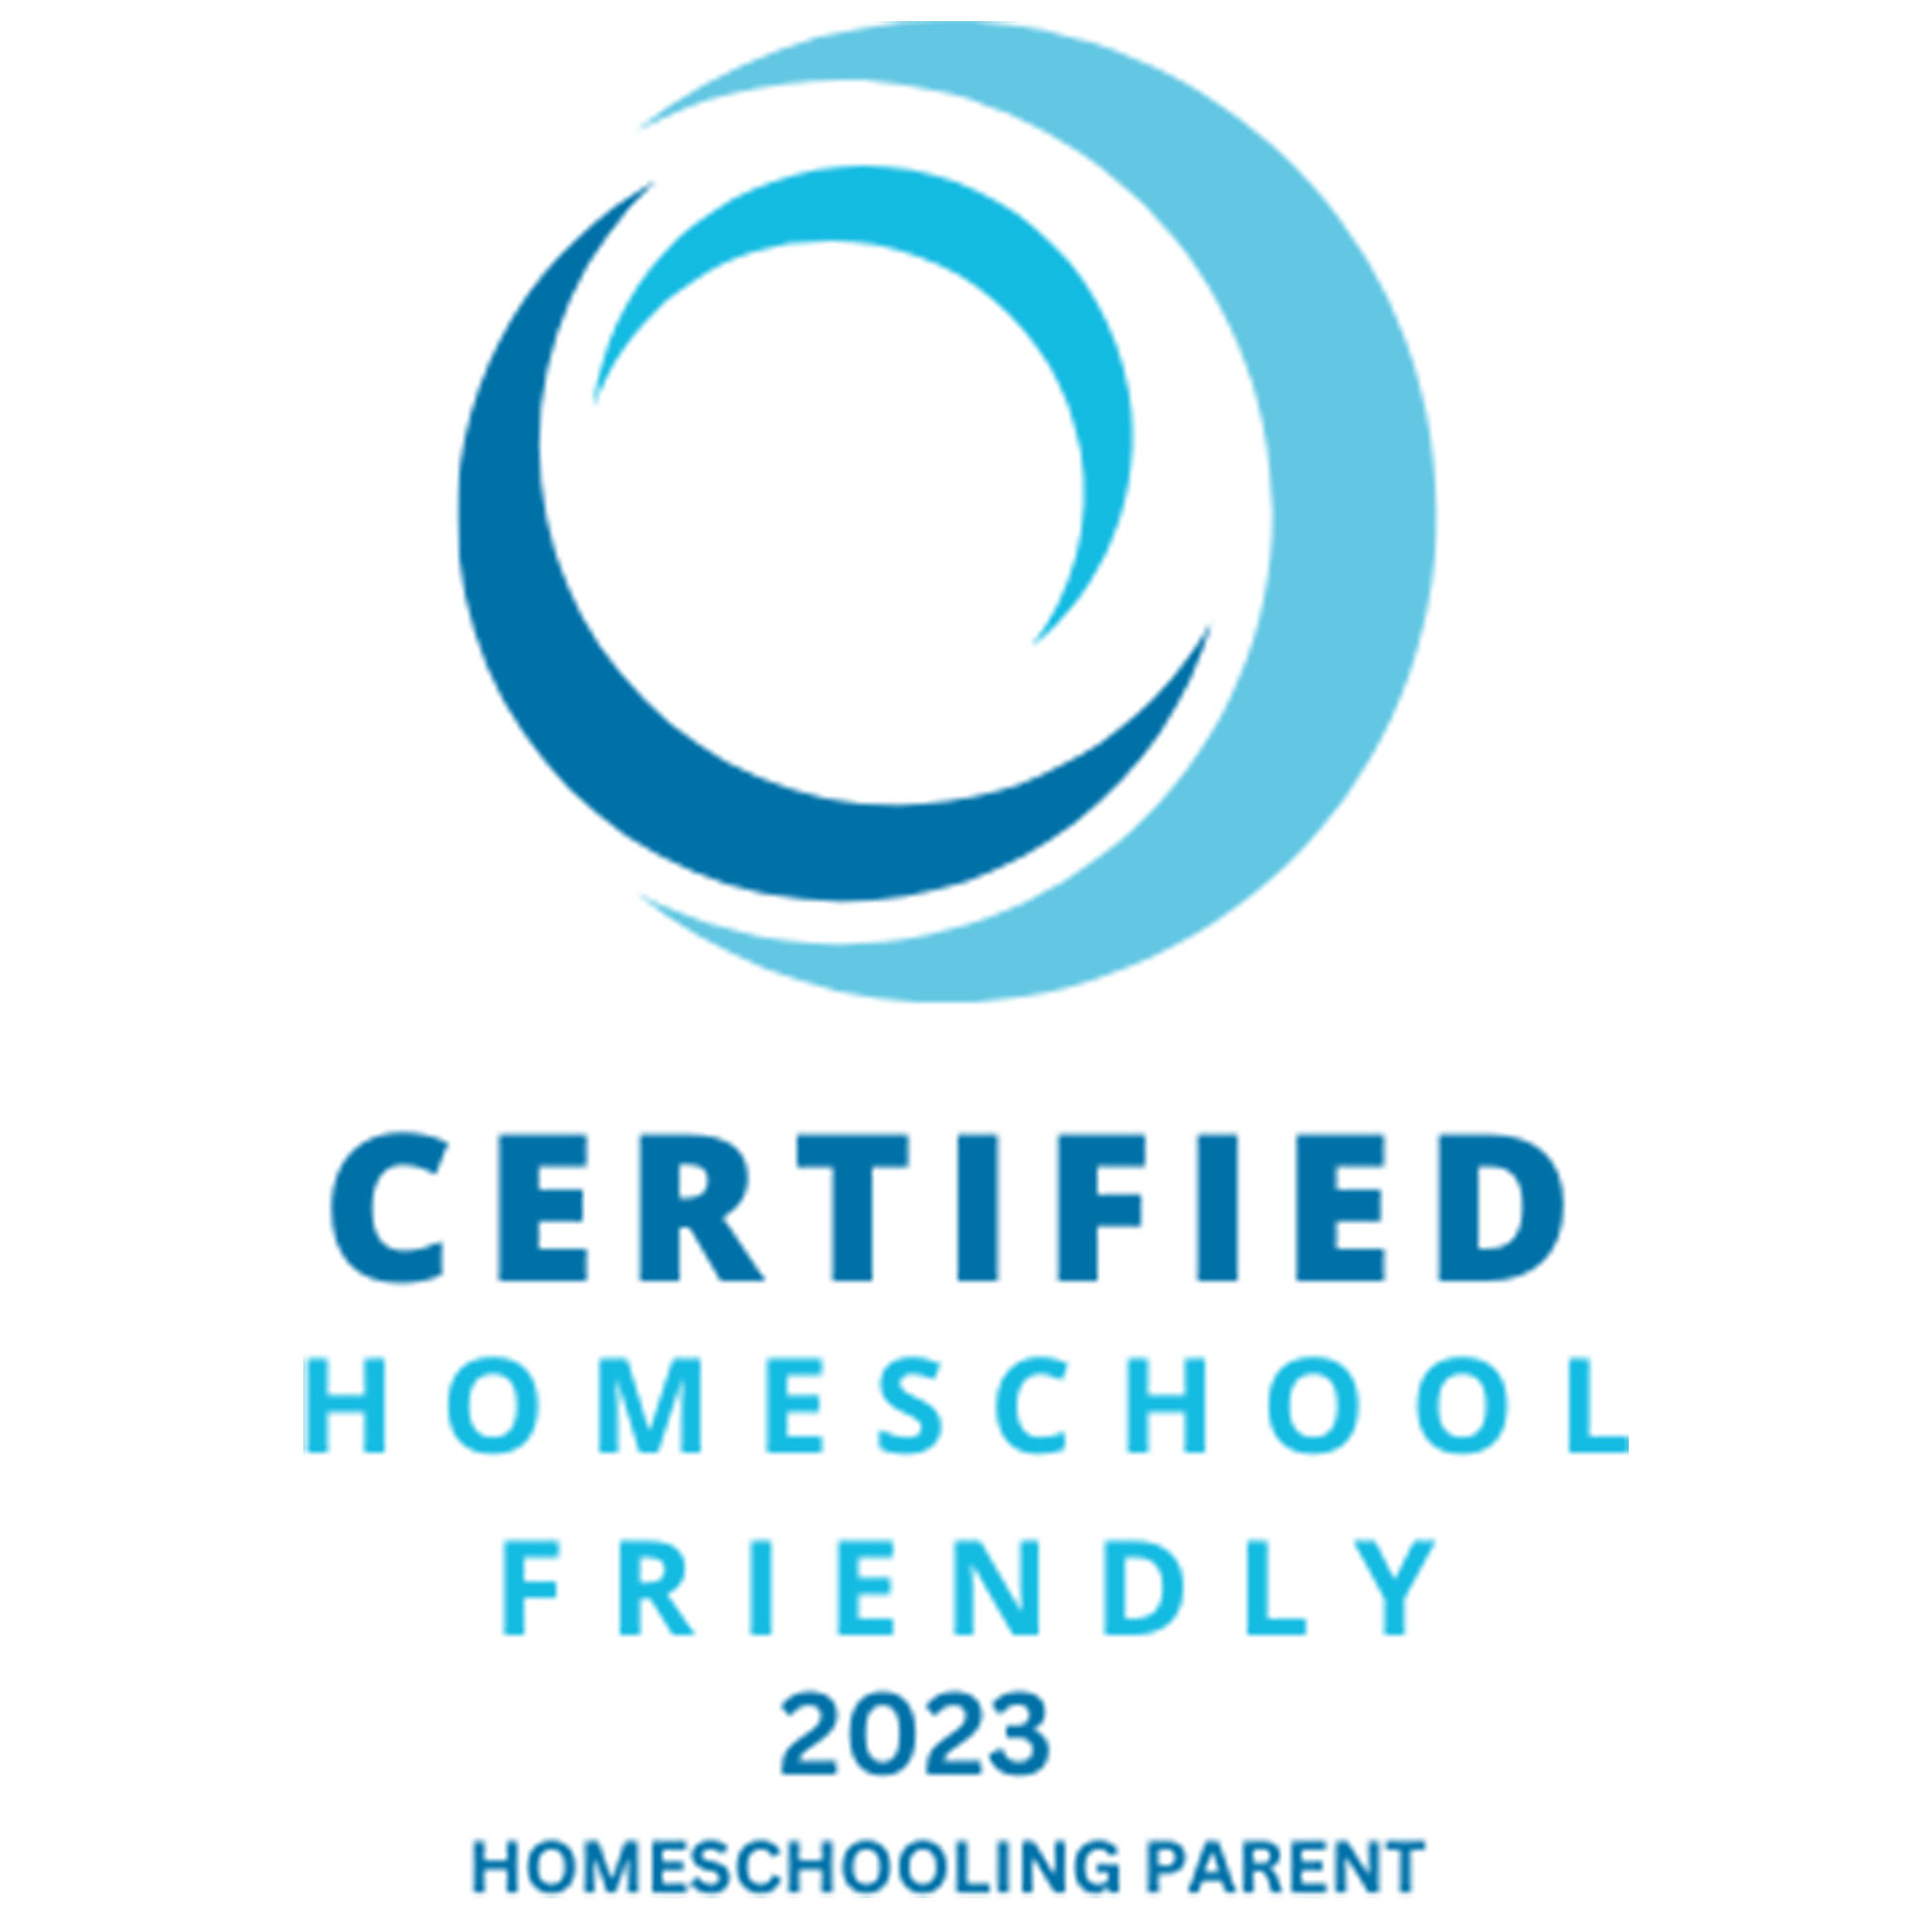 Homeschooling Parent Homeschool-Friendly Certification